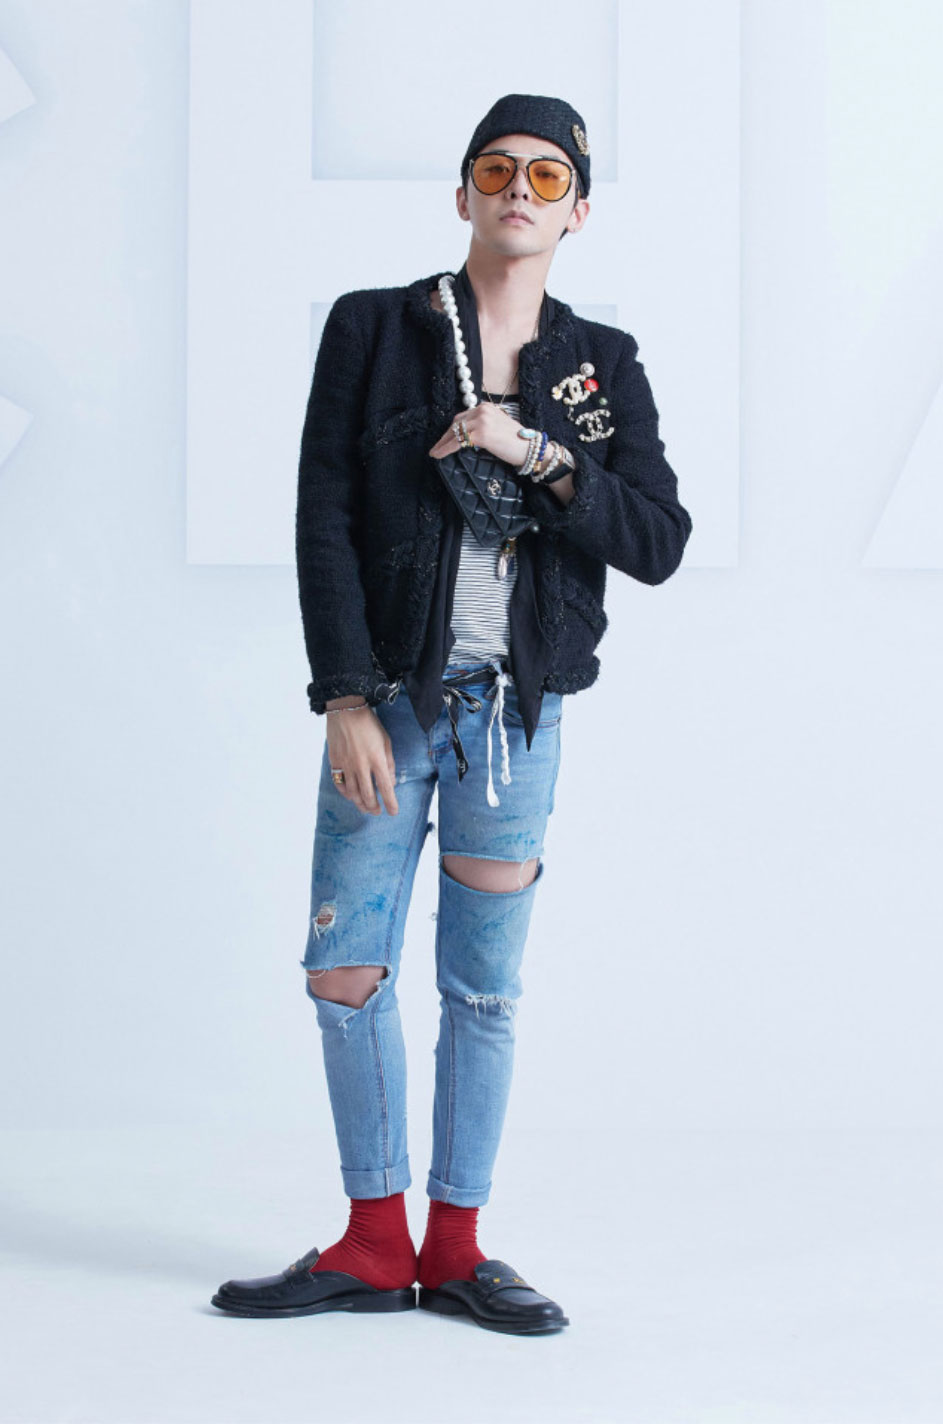 G-Dragon, Jennie BLACKPINK mặc toàn Chanel theo dõi show diễn Xuân Hè 2021 từ xa